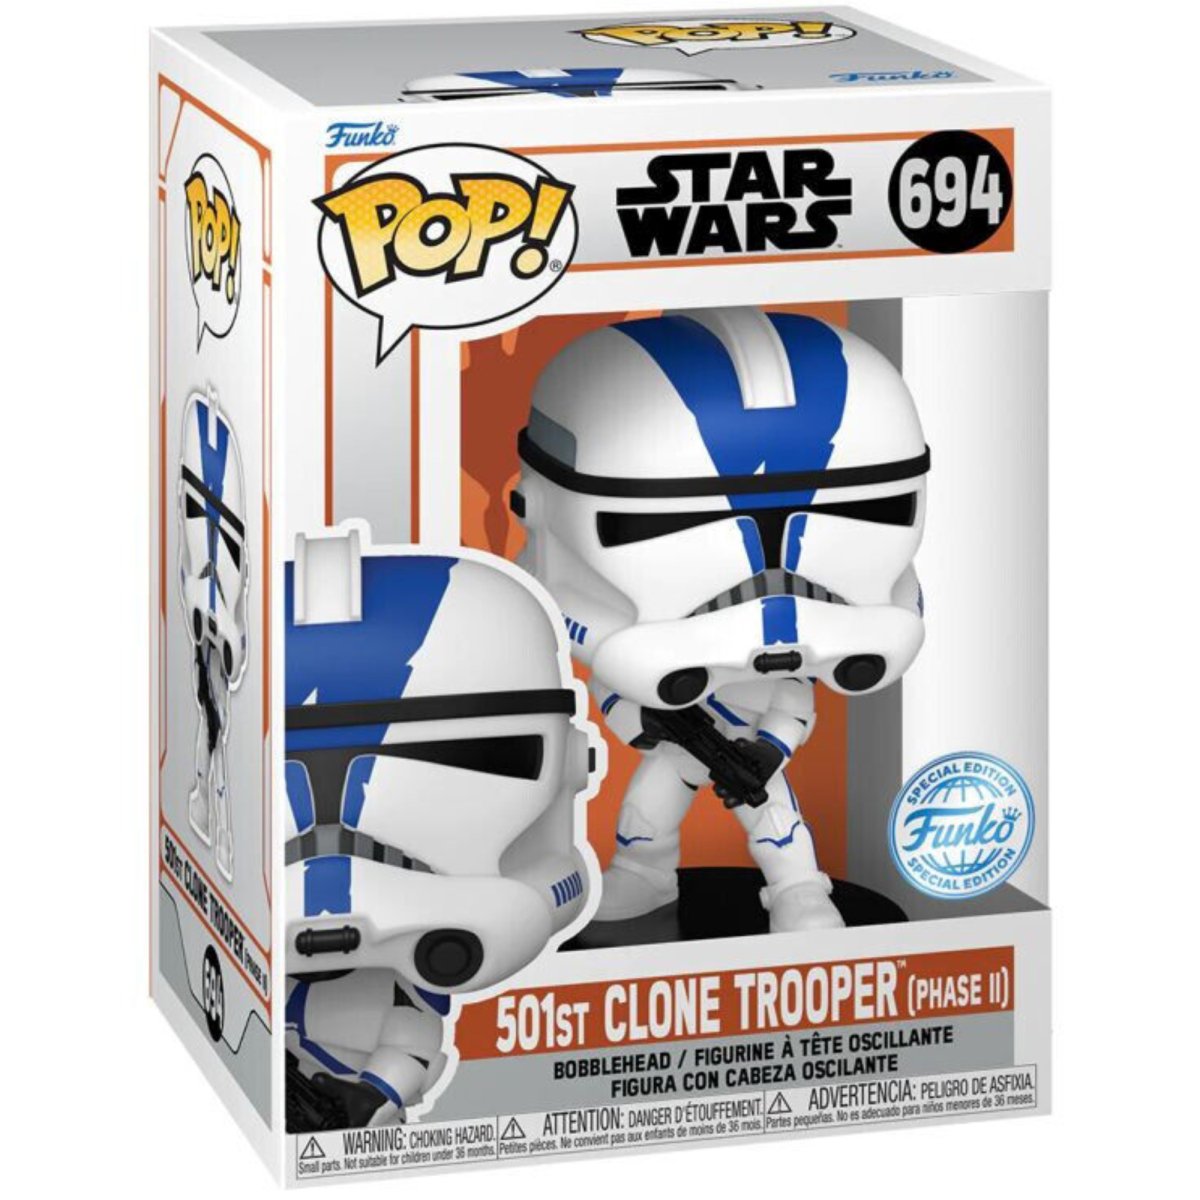 Star Wars - 501st Clone Trooper (Phase II) (Special Edition) #694 - Funko Pop! Vinyl Star Wars - Persona Toys